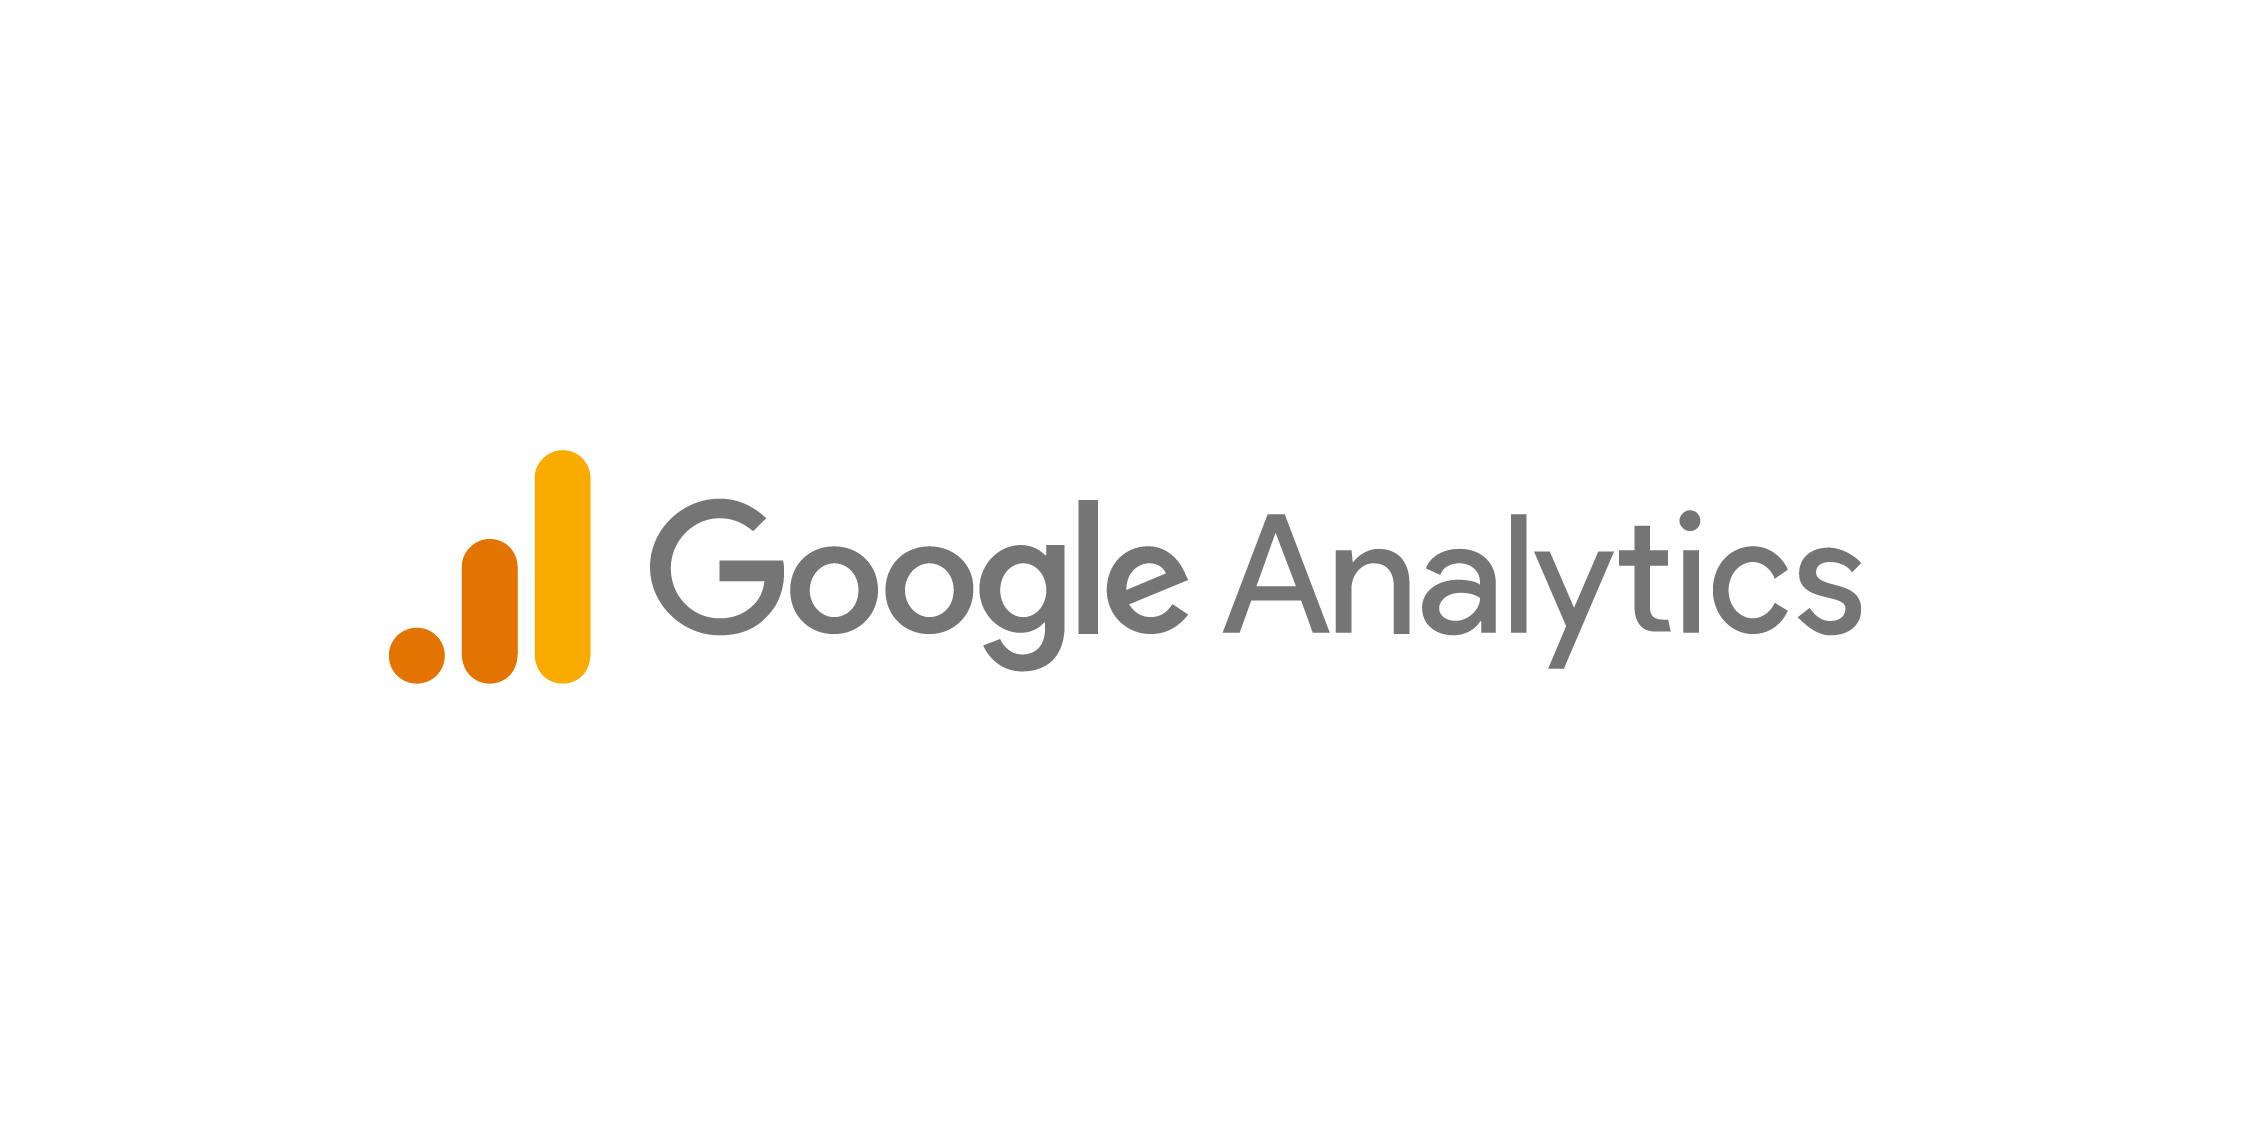 Google Analytics demand generation tools